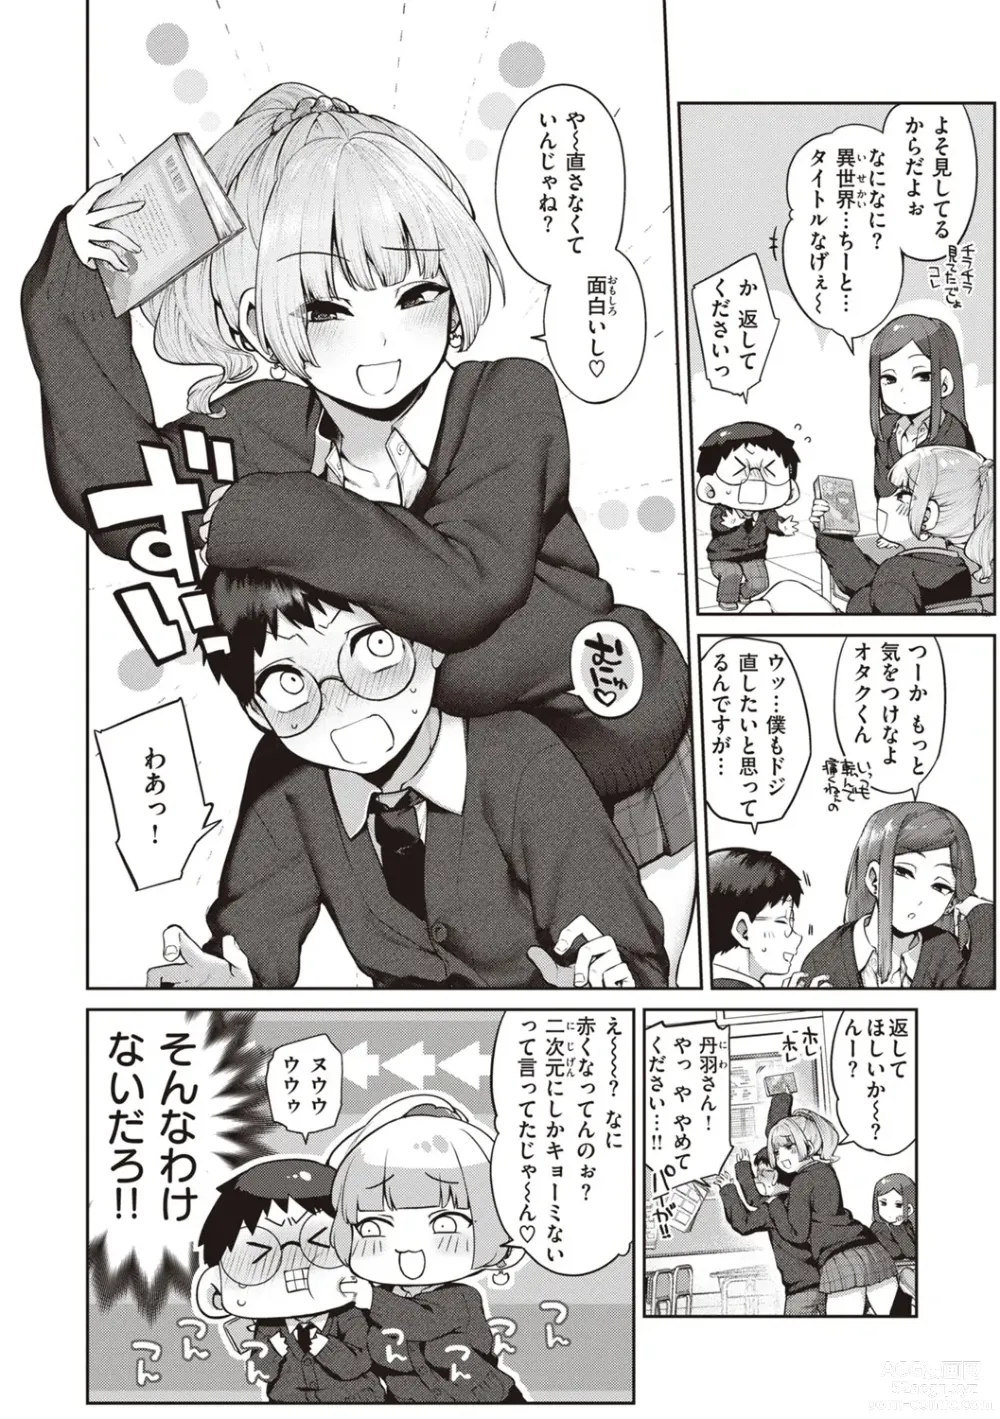 Page 6 of manga DA-DA-MO-RE